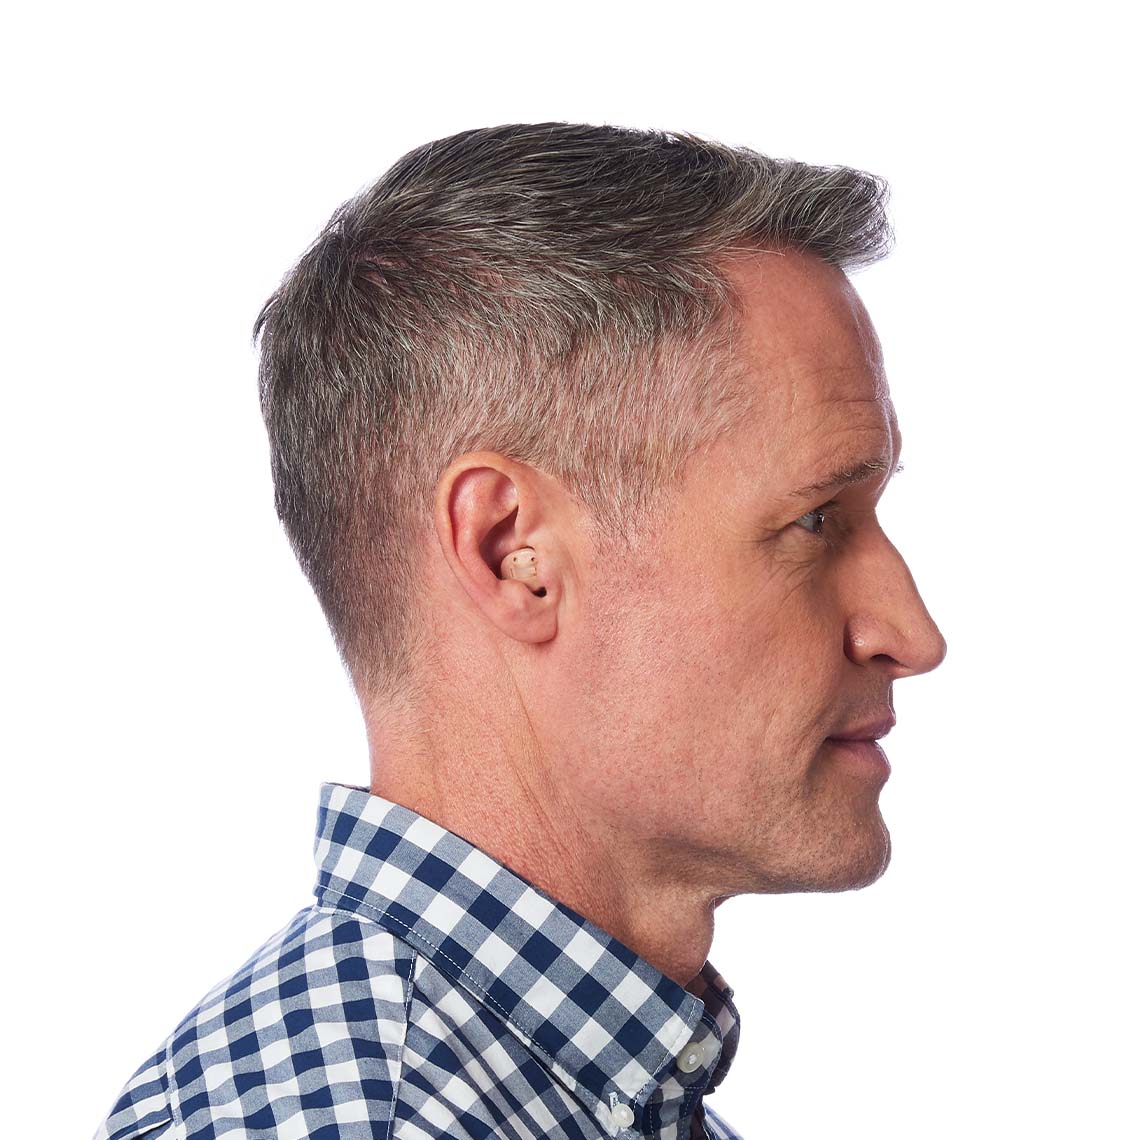 A ITC hearing aid shown in a man's ear